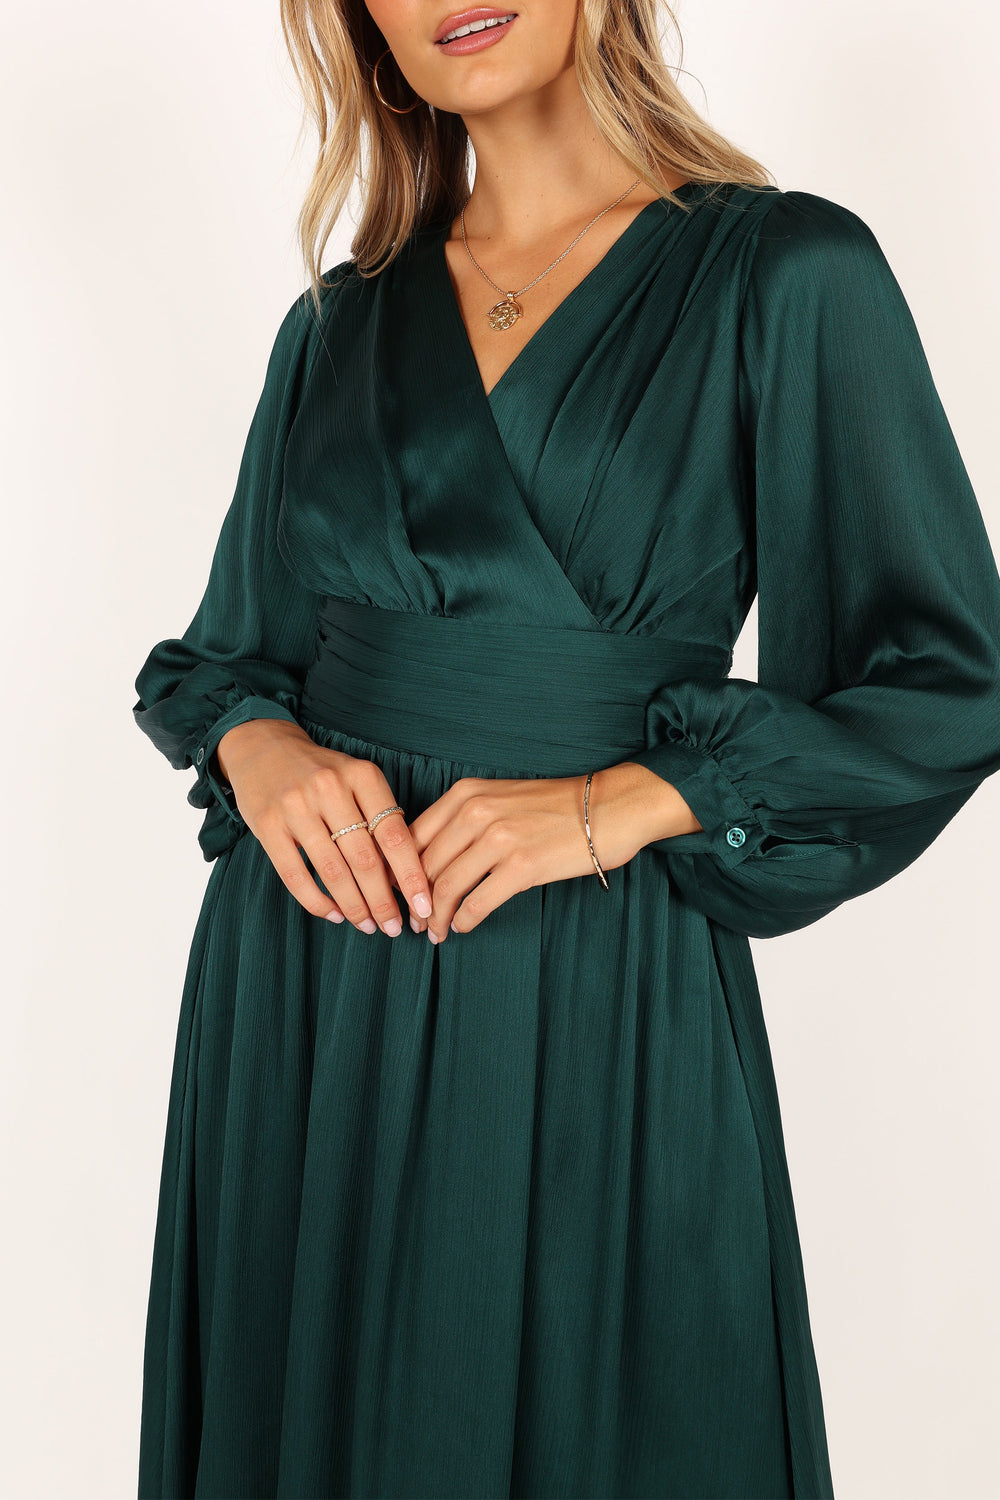 Emerald Green Maxi Dress - OTS Maxi Dress - Balloon Sleeve Dress